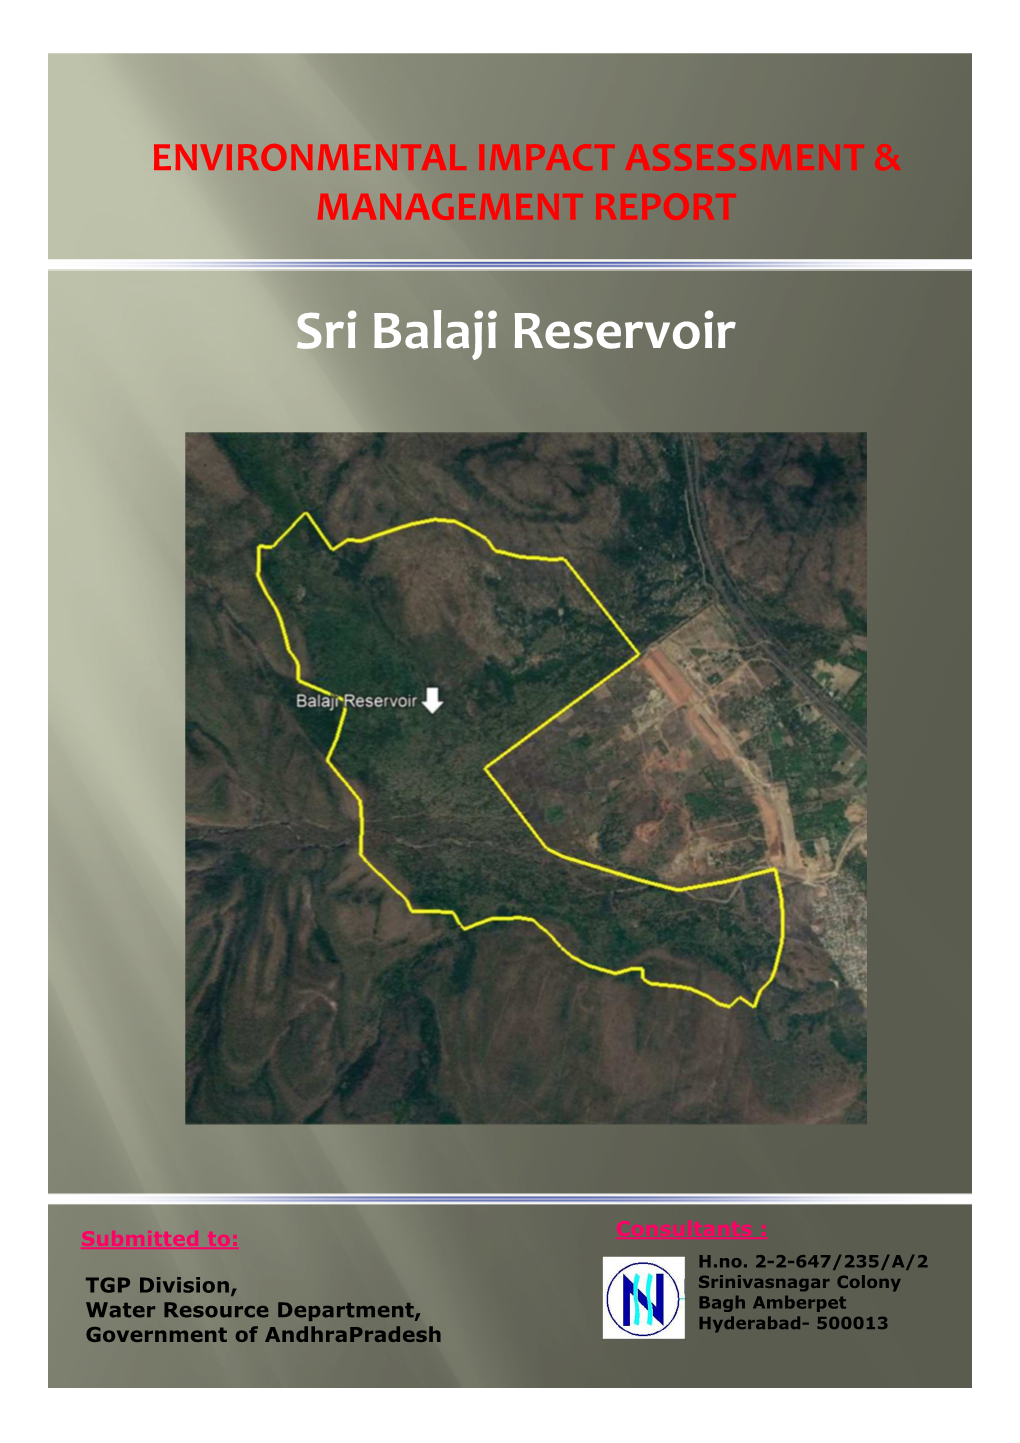 Sri Balaji Reservoir